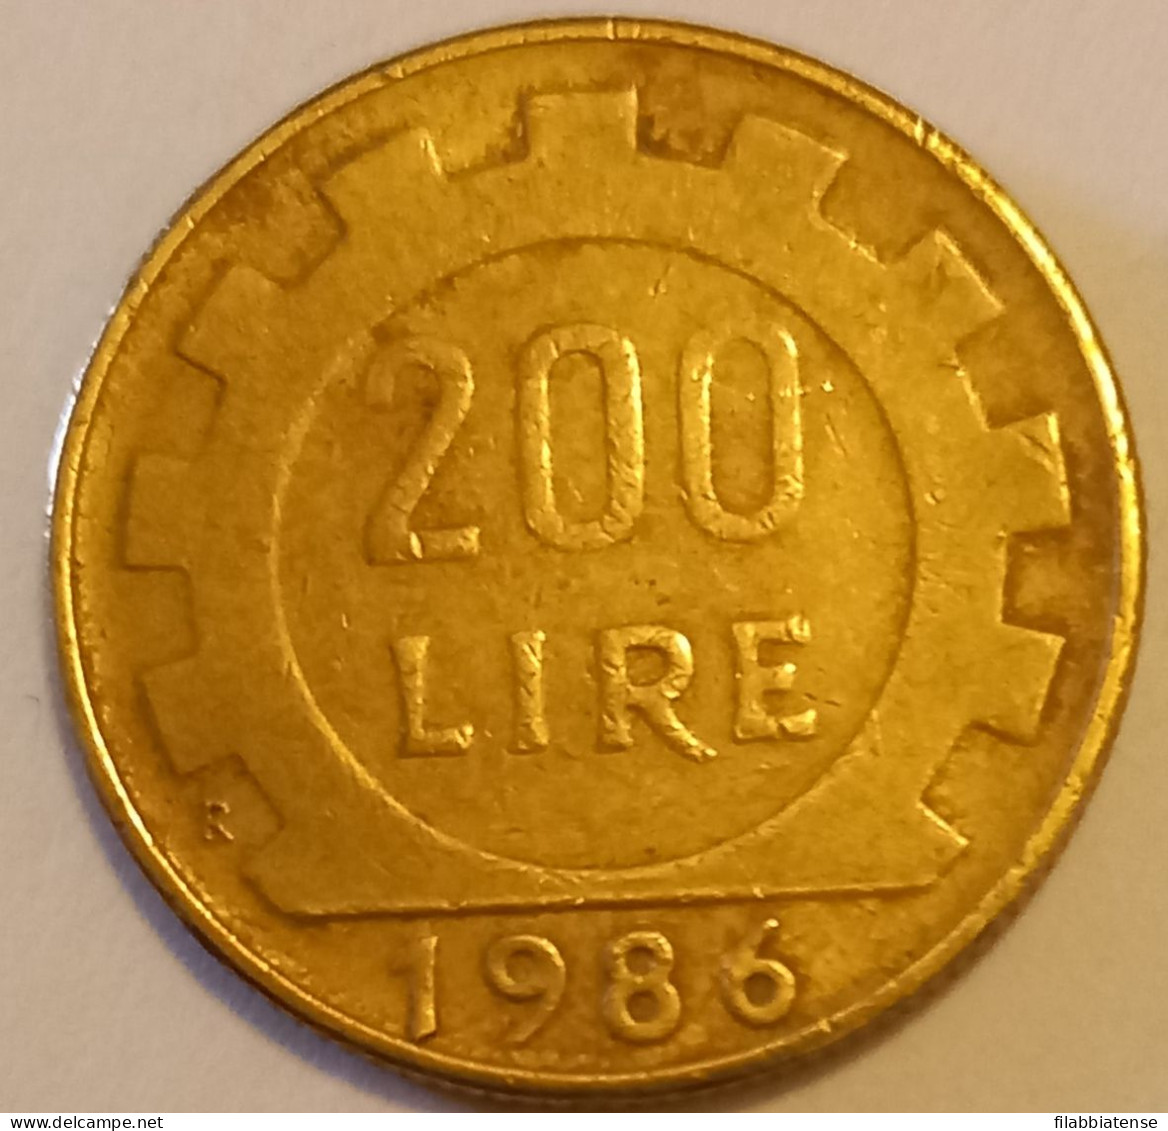 1986 - Italia 200 Lire   ----- - 200 Lire